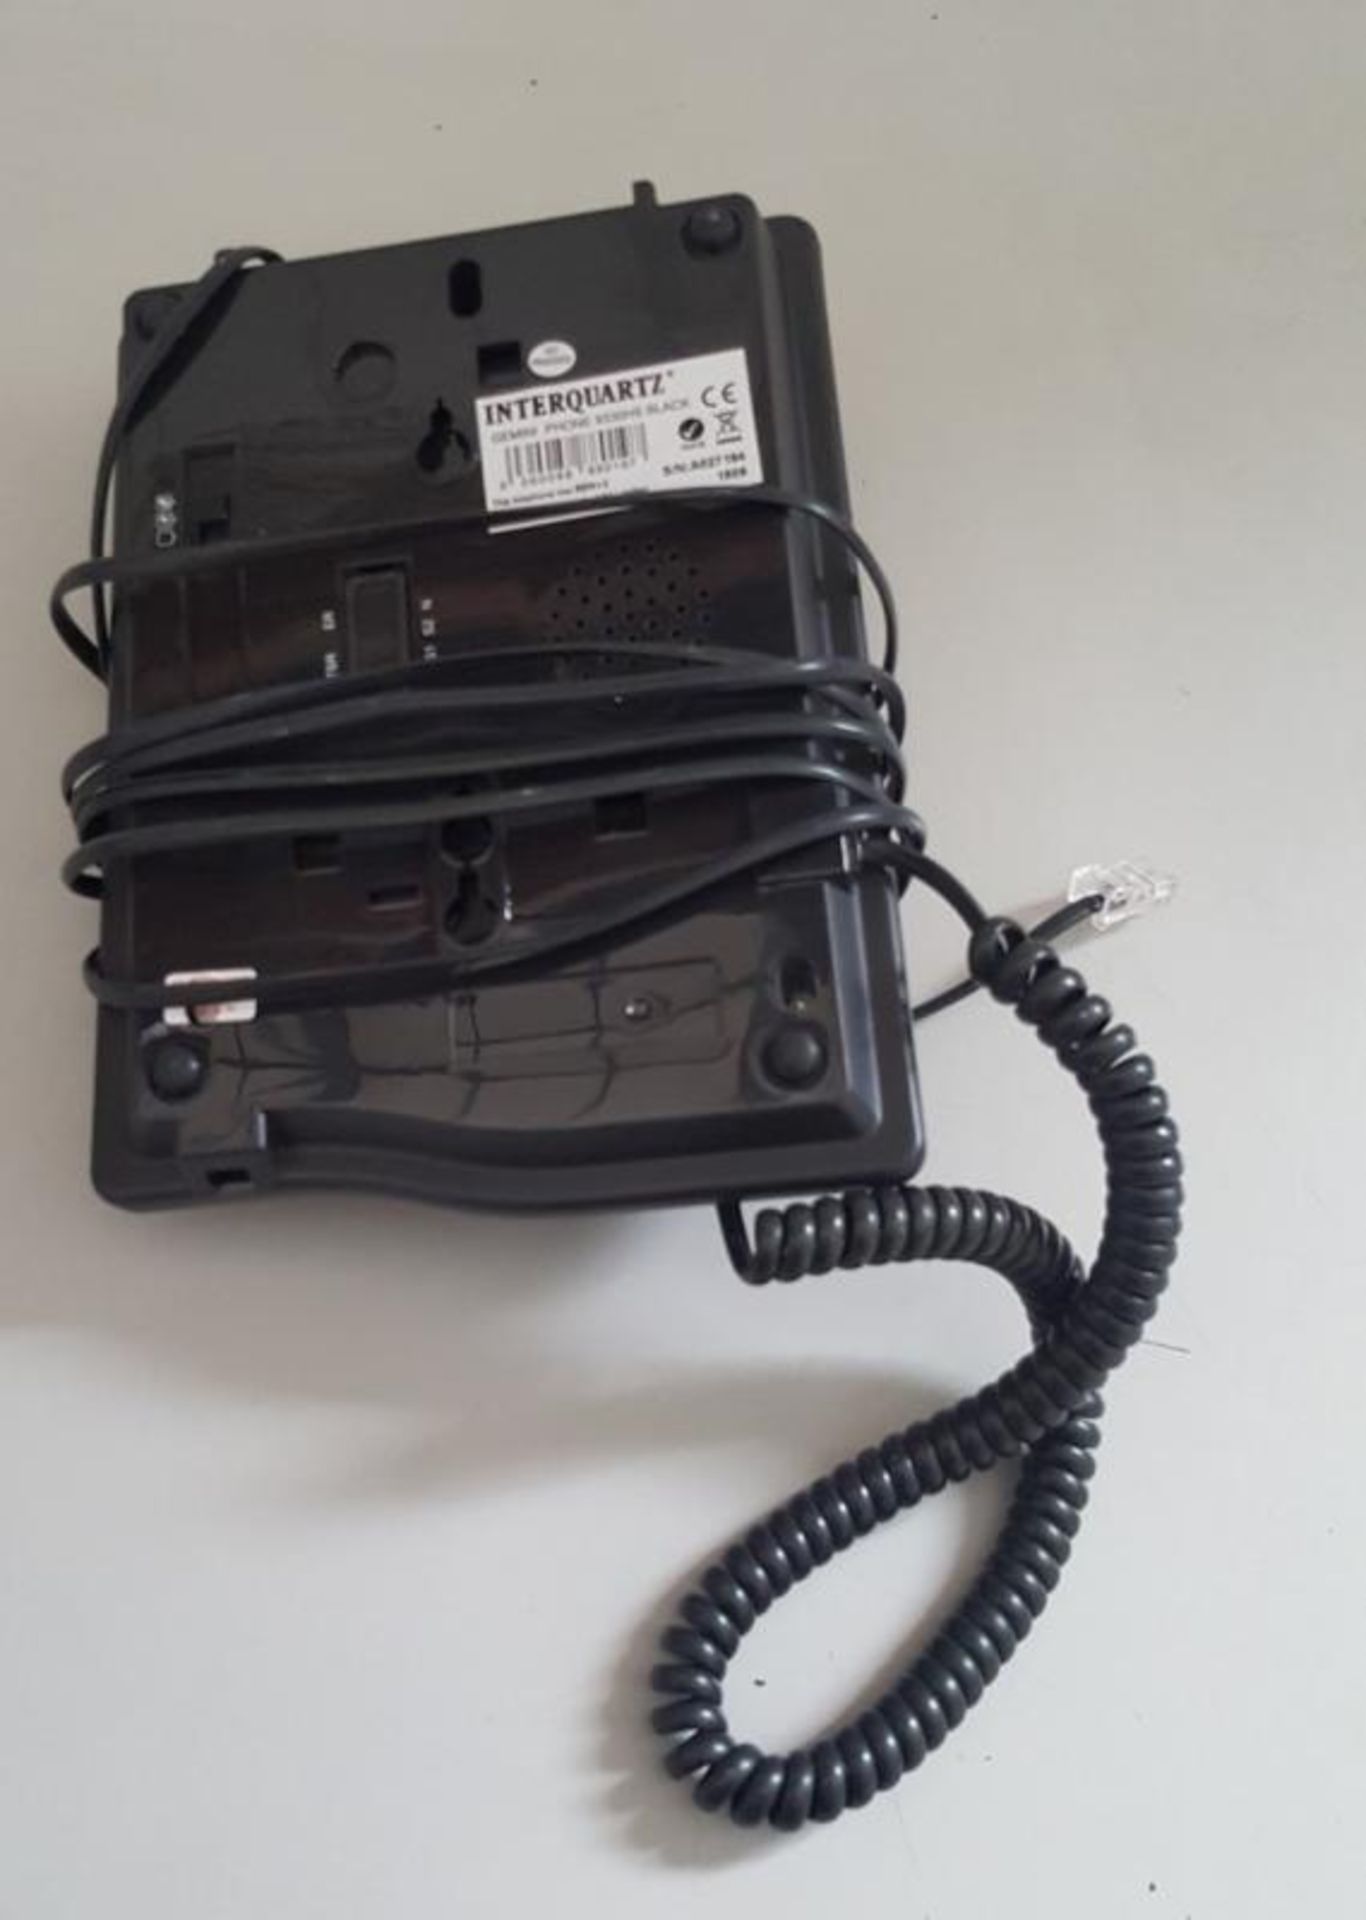 1 x Interquartz Gemini Basic 9330 Corded Office Phone - Ref CQ235/K2 - CL379 - Location: Altrincham - Bild 3 aus 3